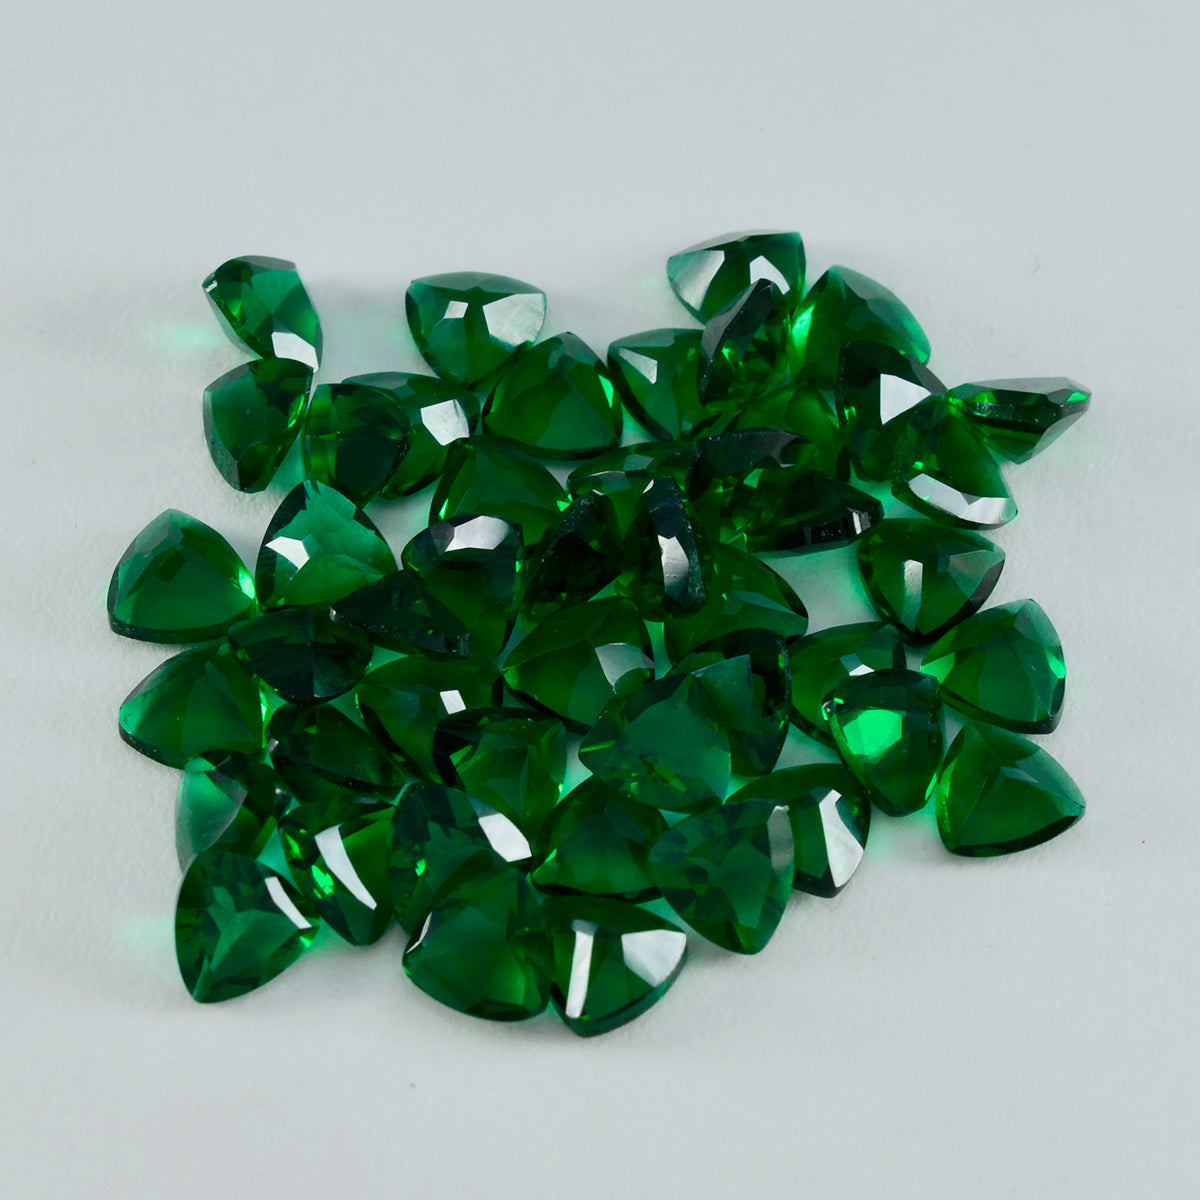 Riyogems 1PC Green Emerald CZ Faceted 7x7 mm Trillion Shape beauty Quality Loose Gem